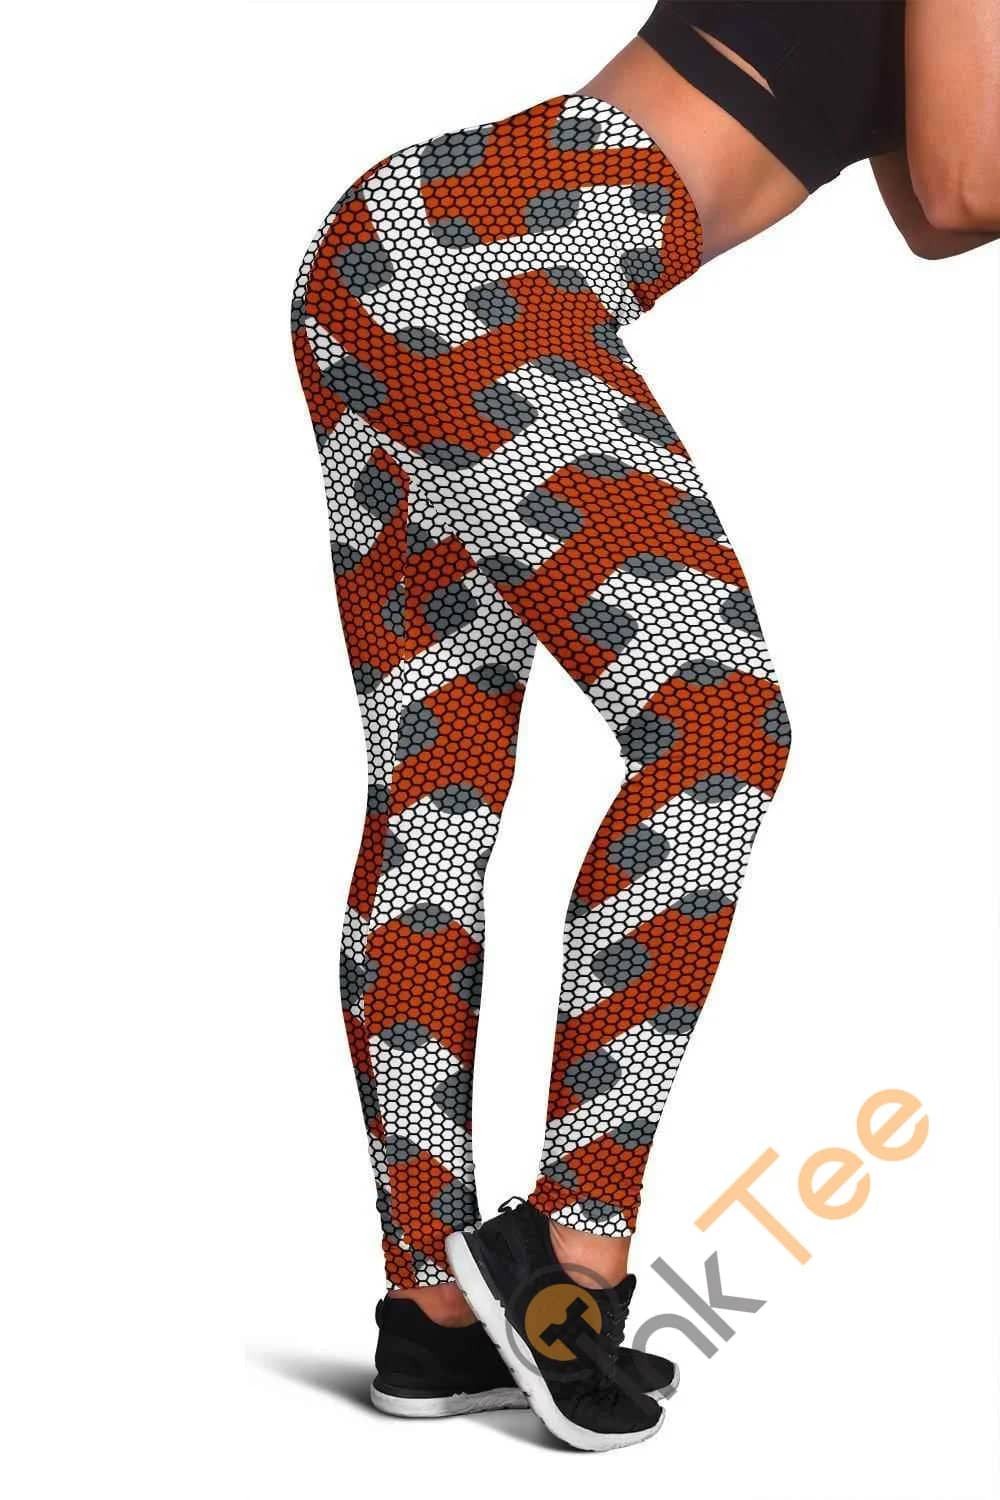 Syracuse Orange Inspired Liberty 3D All Over Print For Yoga Fitness Fashion Women'S Leggings